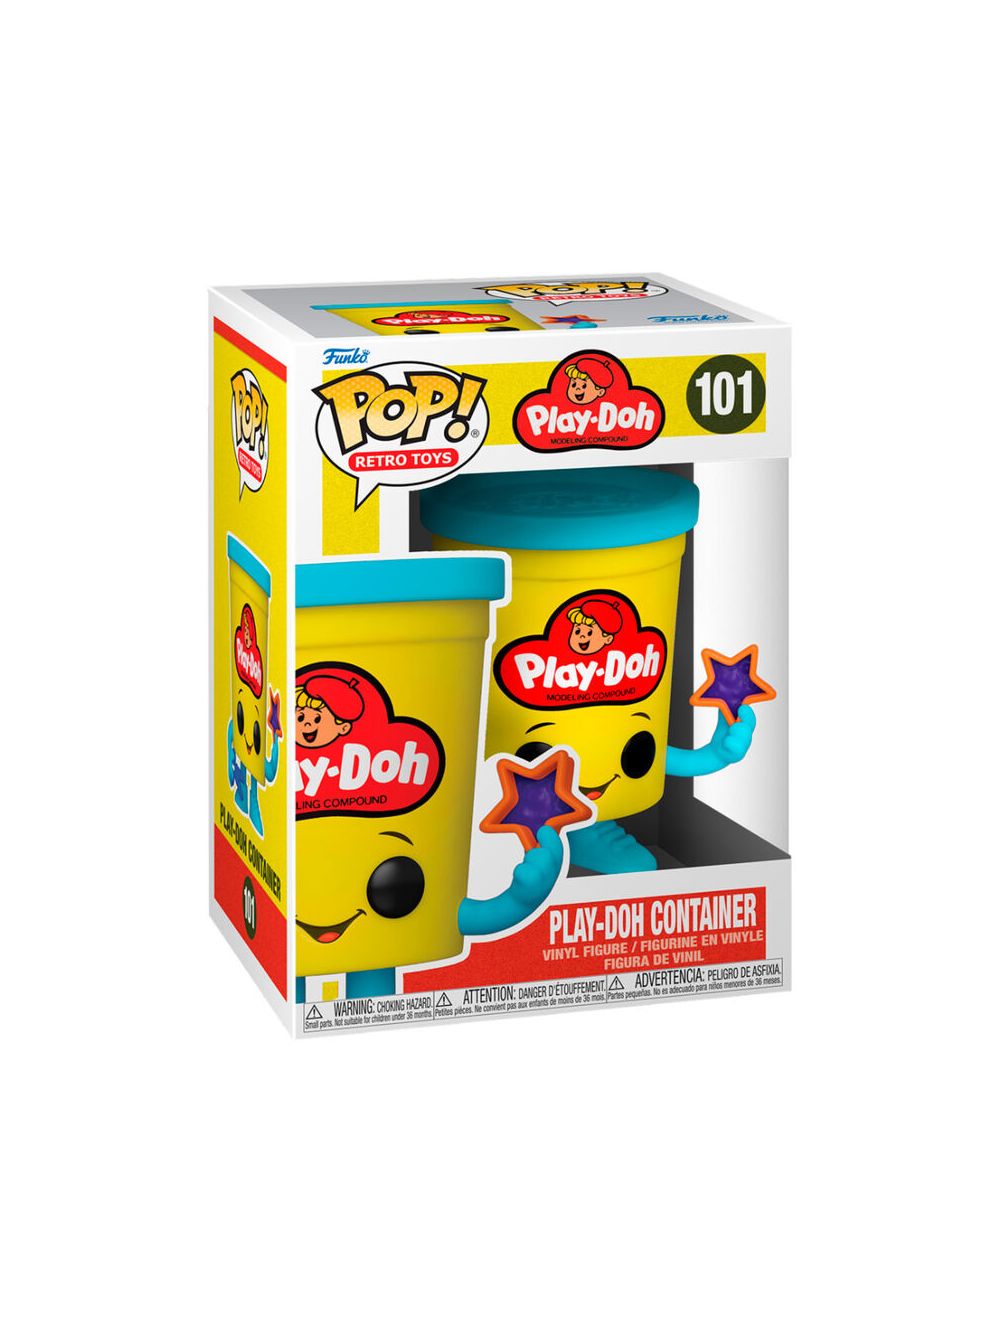 Funko POP! Vinyl Play-Doh Container vinyl 10cm figura